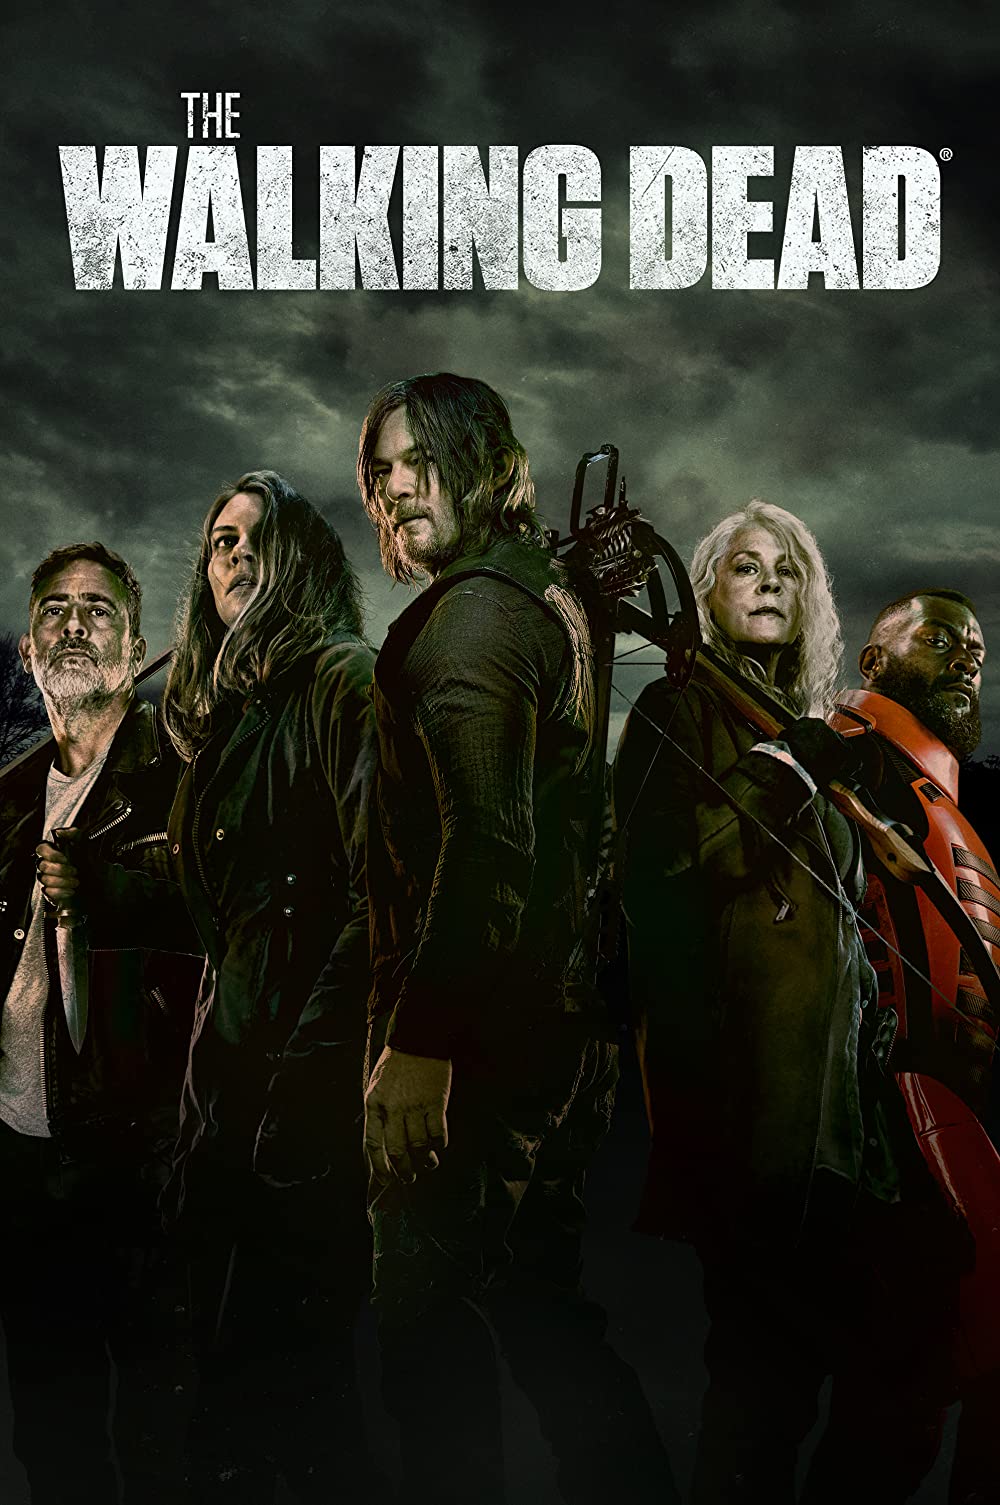 Stiahni si Seriál Zivi mrtvi / The Walking Dead S11E01 (CZ/EN)[WebRip][1080p][HEVC] = CSFD 80%